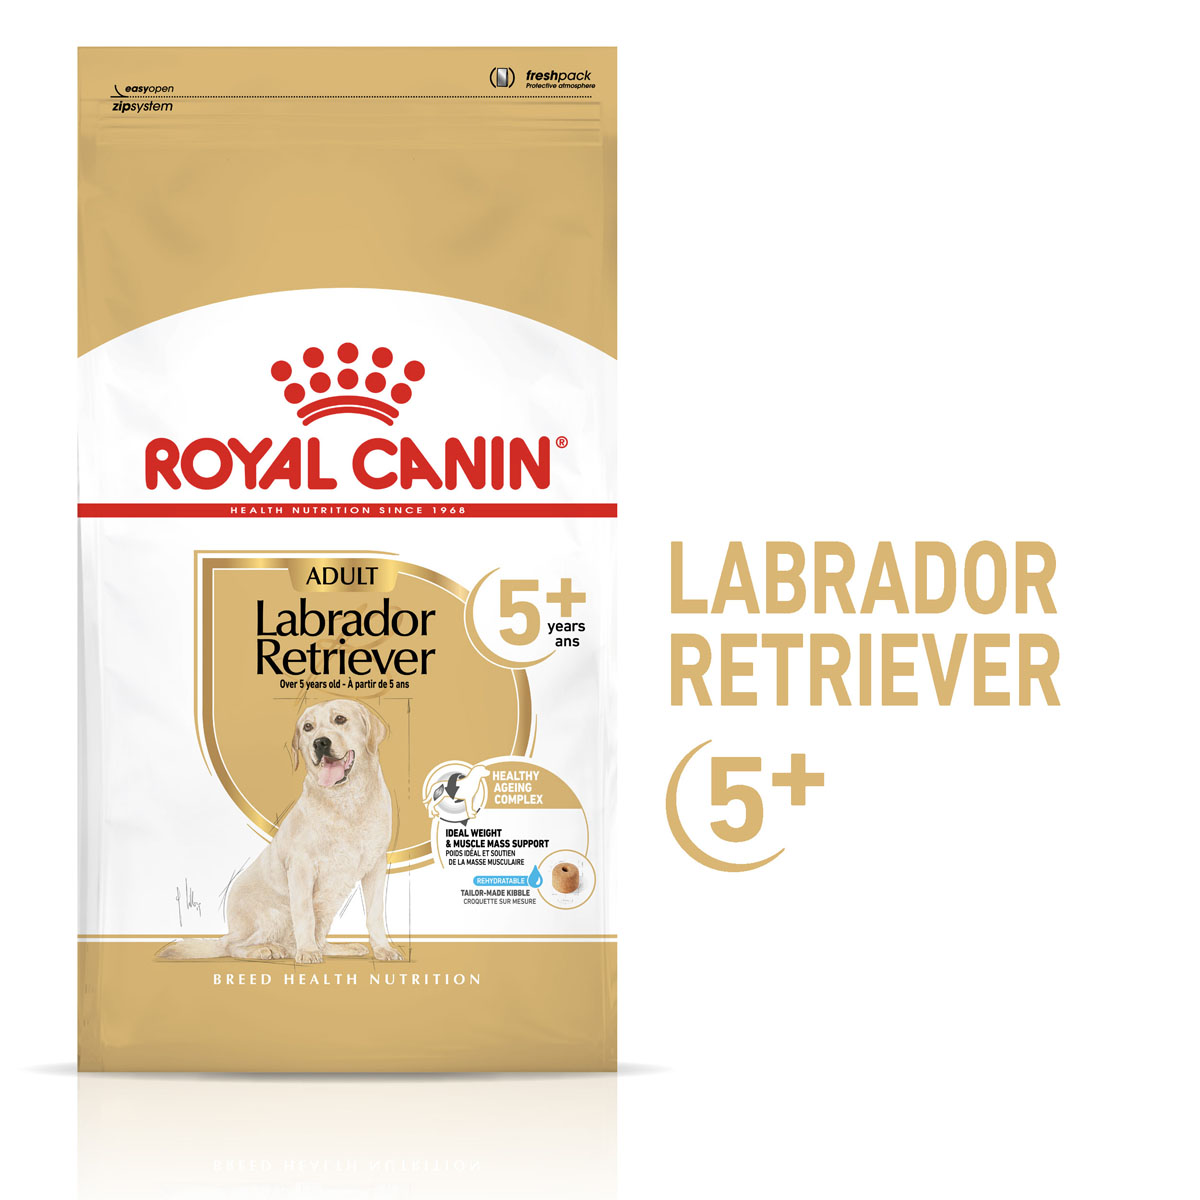 ROYAL CANIN Labrador Retriever Adult 5+ Trockenfutter für Hunde ab 5 Jahren 3kg von Royal Canin